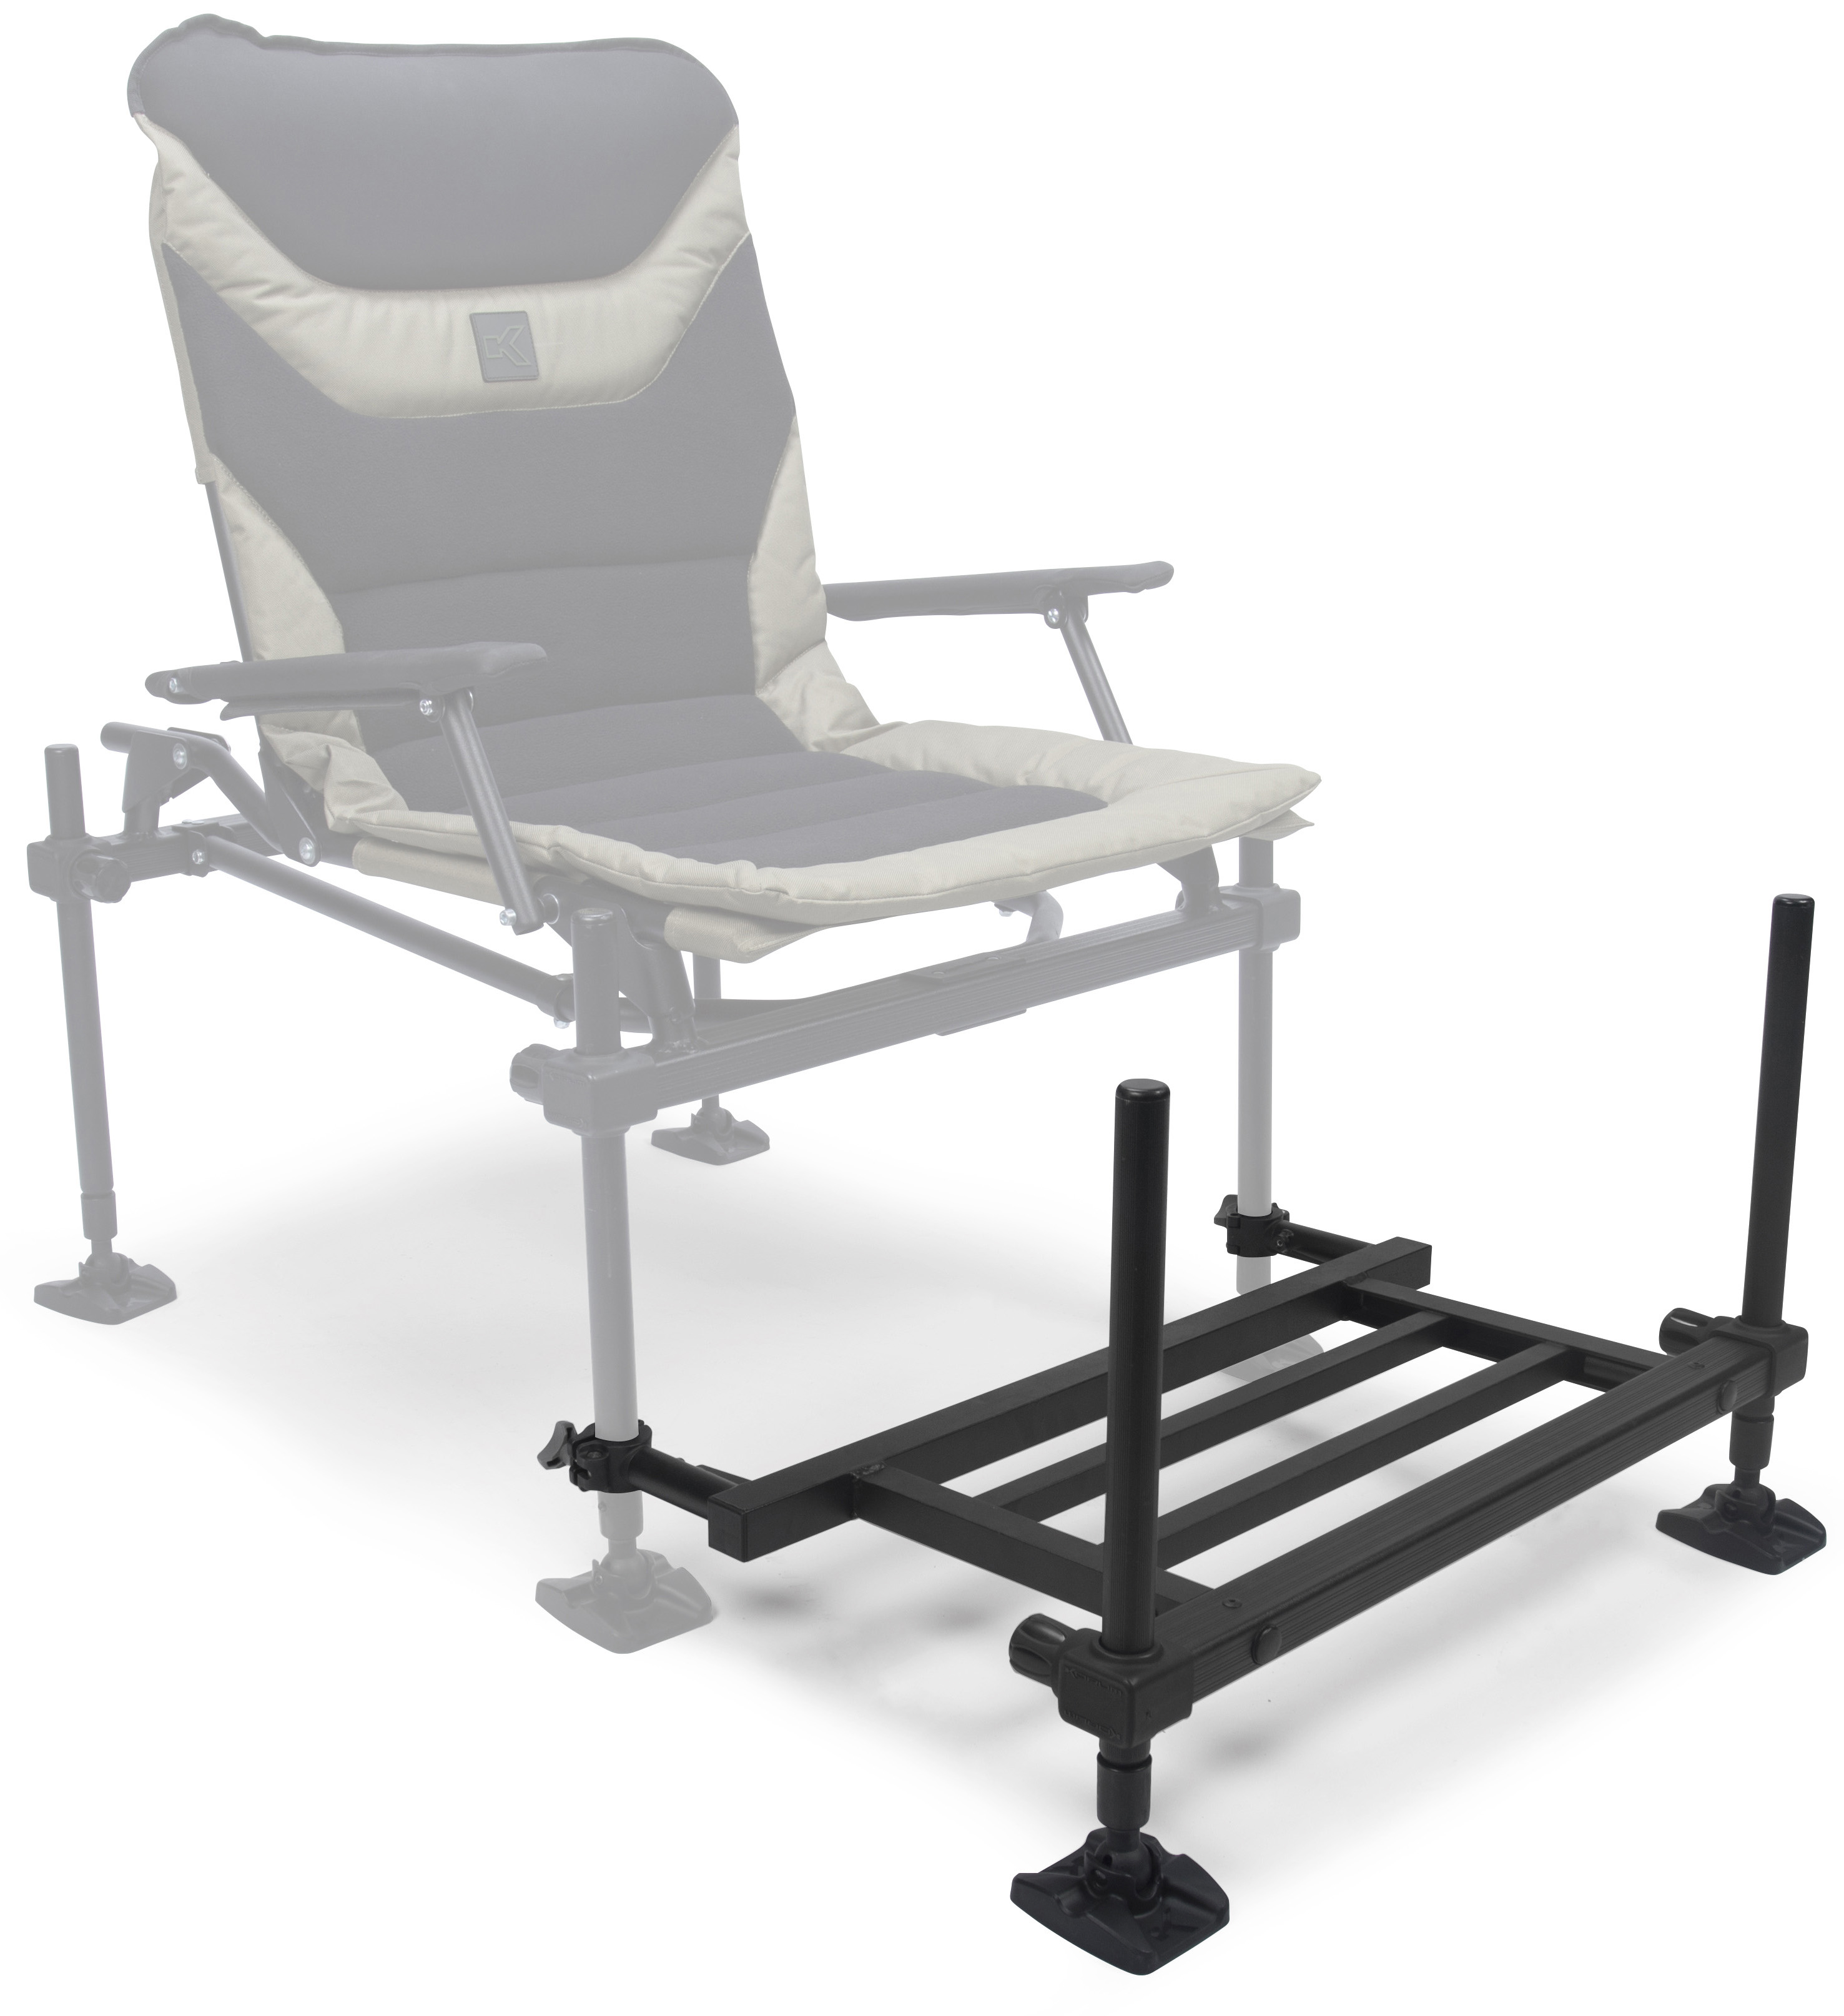 Педана для кресла Standart Korum Accessory Chair x25 – foot platform